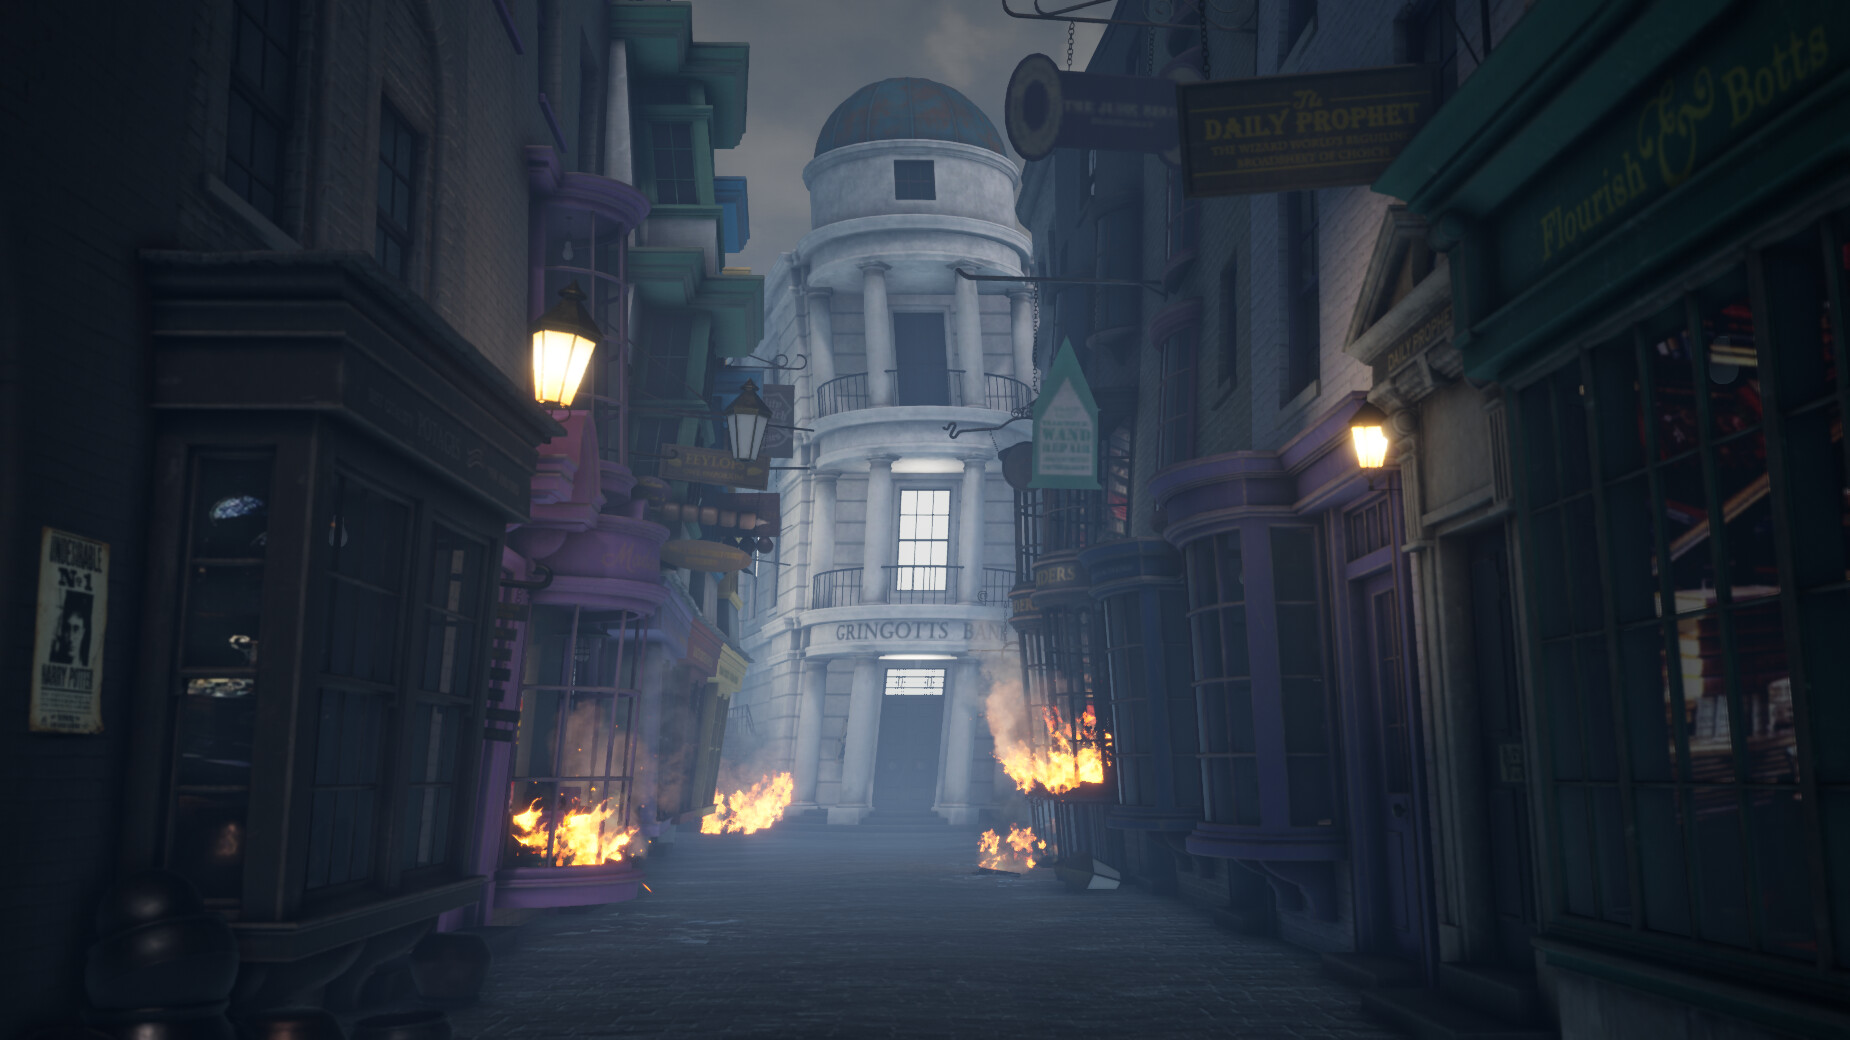 University Games Harry Potter Wizarding World Diagon Alley 3D